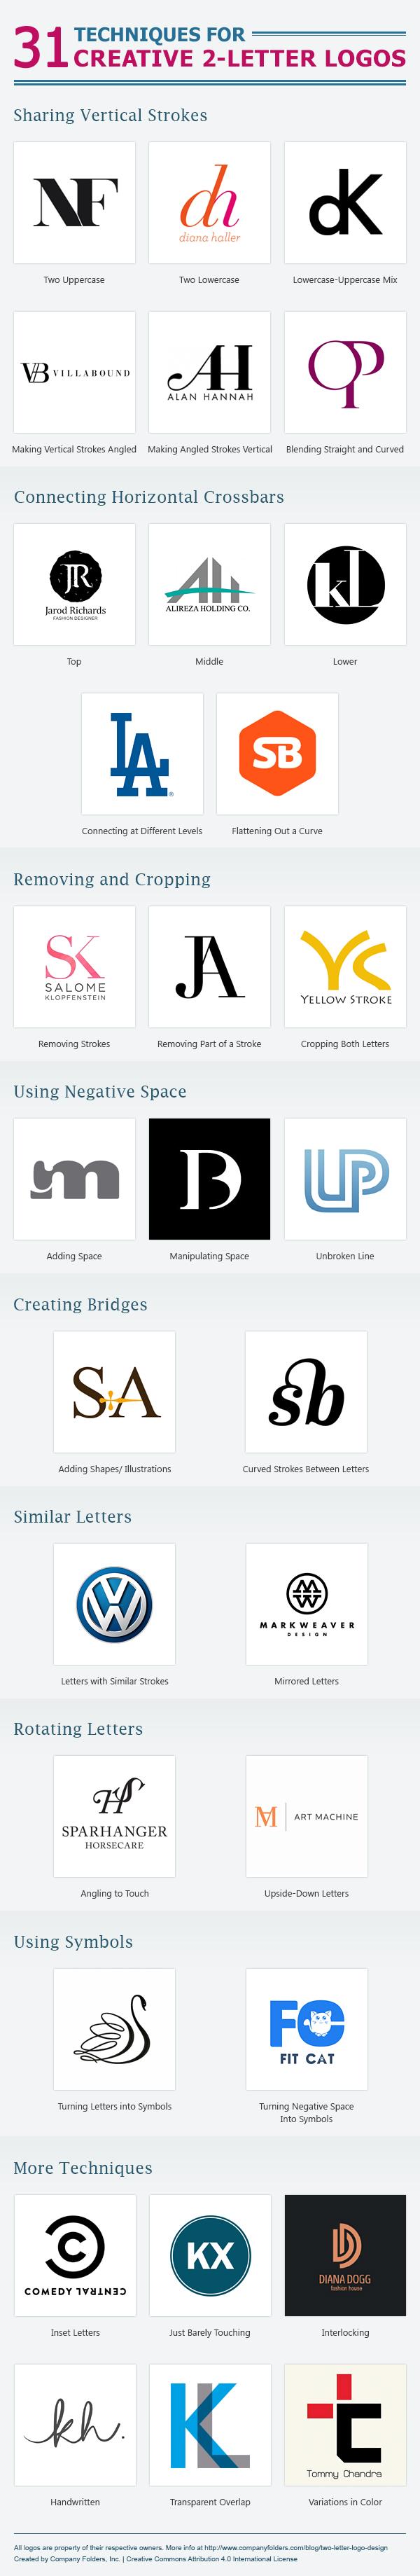 4+ Best Tips For Creating a Letter-Based Logo